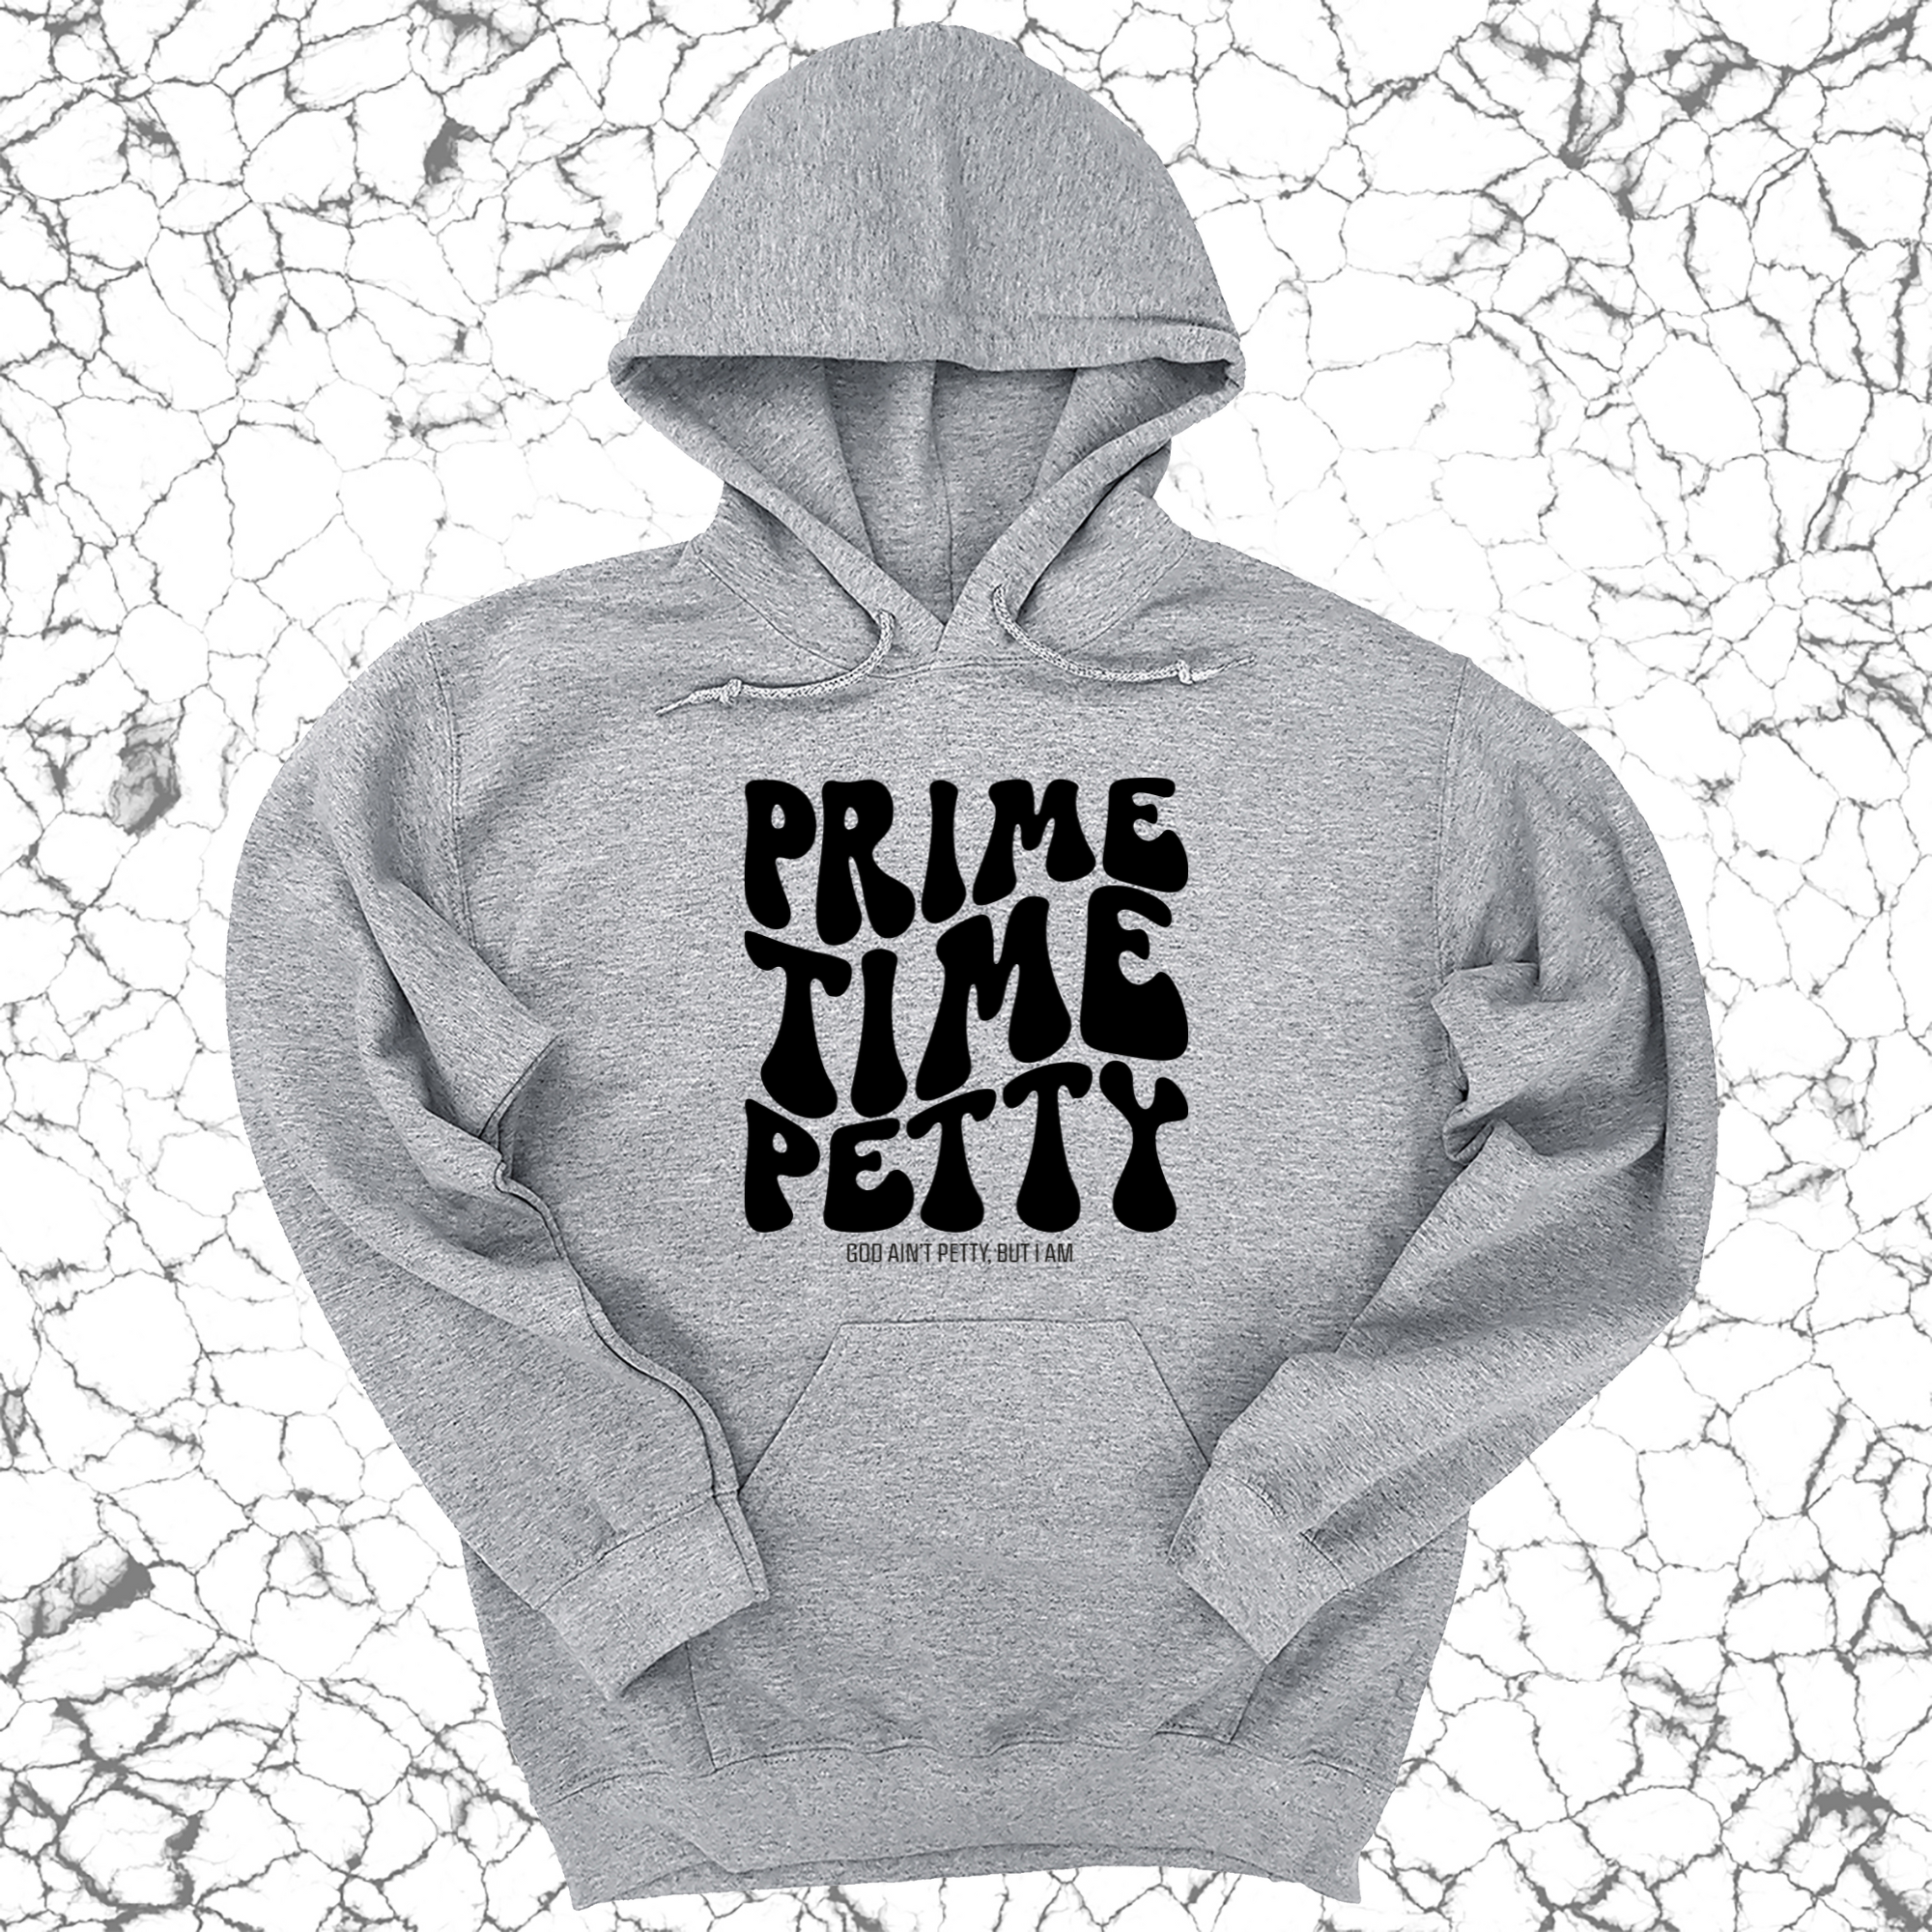 Prime Time Petty Retro Unisex Hoodie-Hoodie-The Original God Ain't Petty But I Am